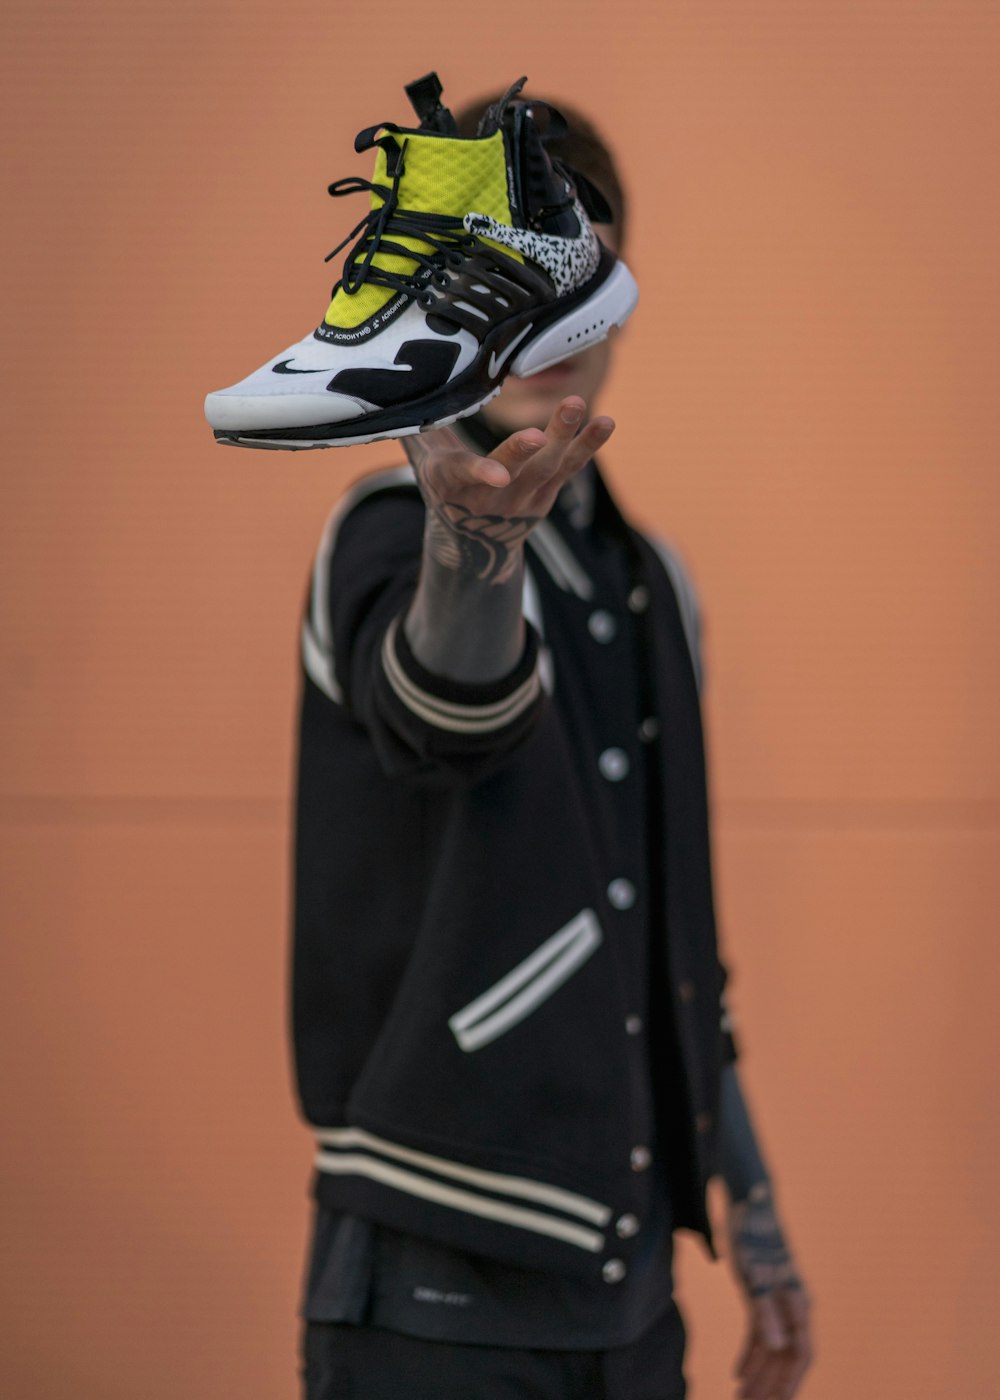 black, white, and yellow Nike high-top shoe